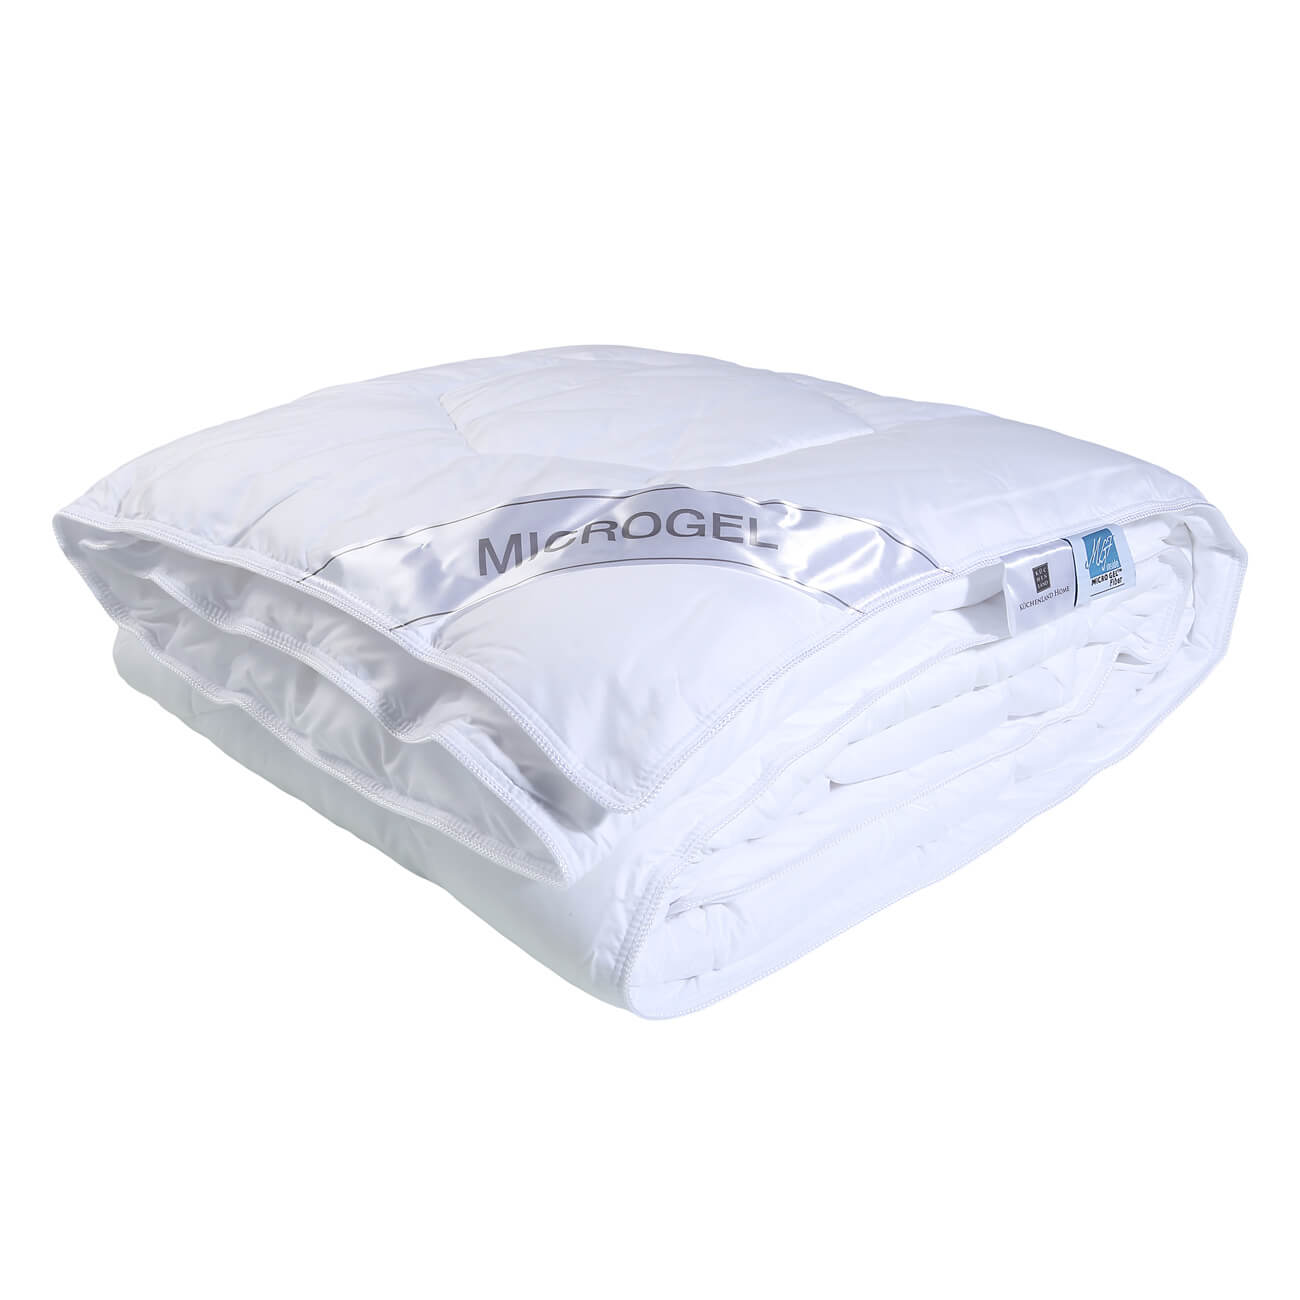 Одеяло, 140х200 см, микрофибра/микрогель, Microgel одеяло 140х200 см микрофибра холлофайбер бежевое молочное hollow fiber